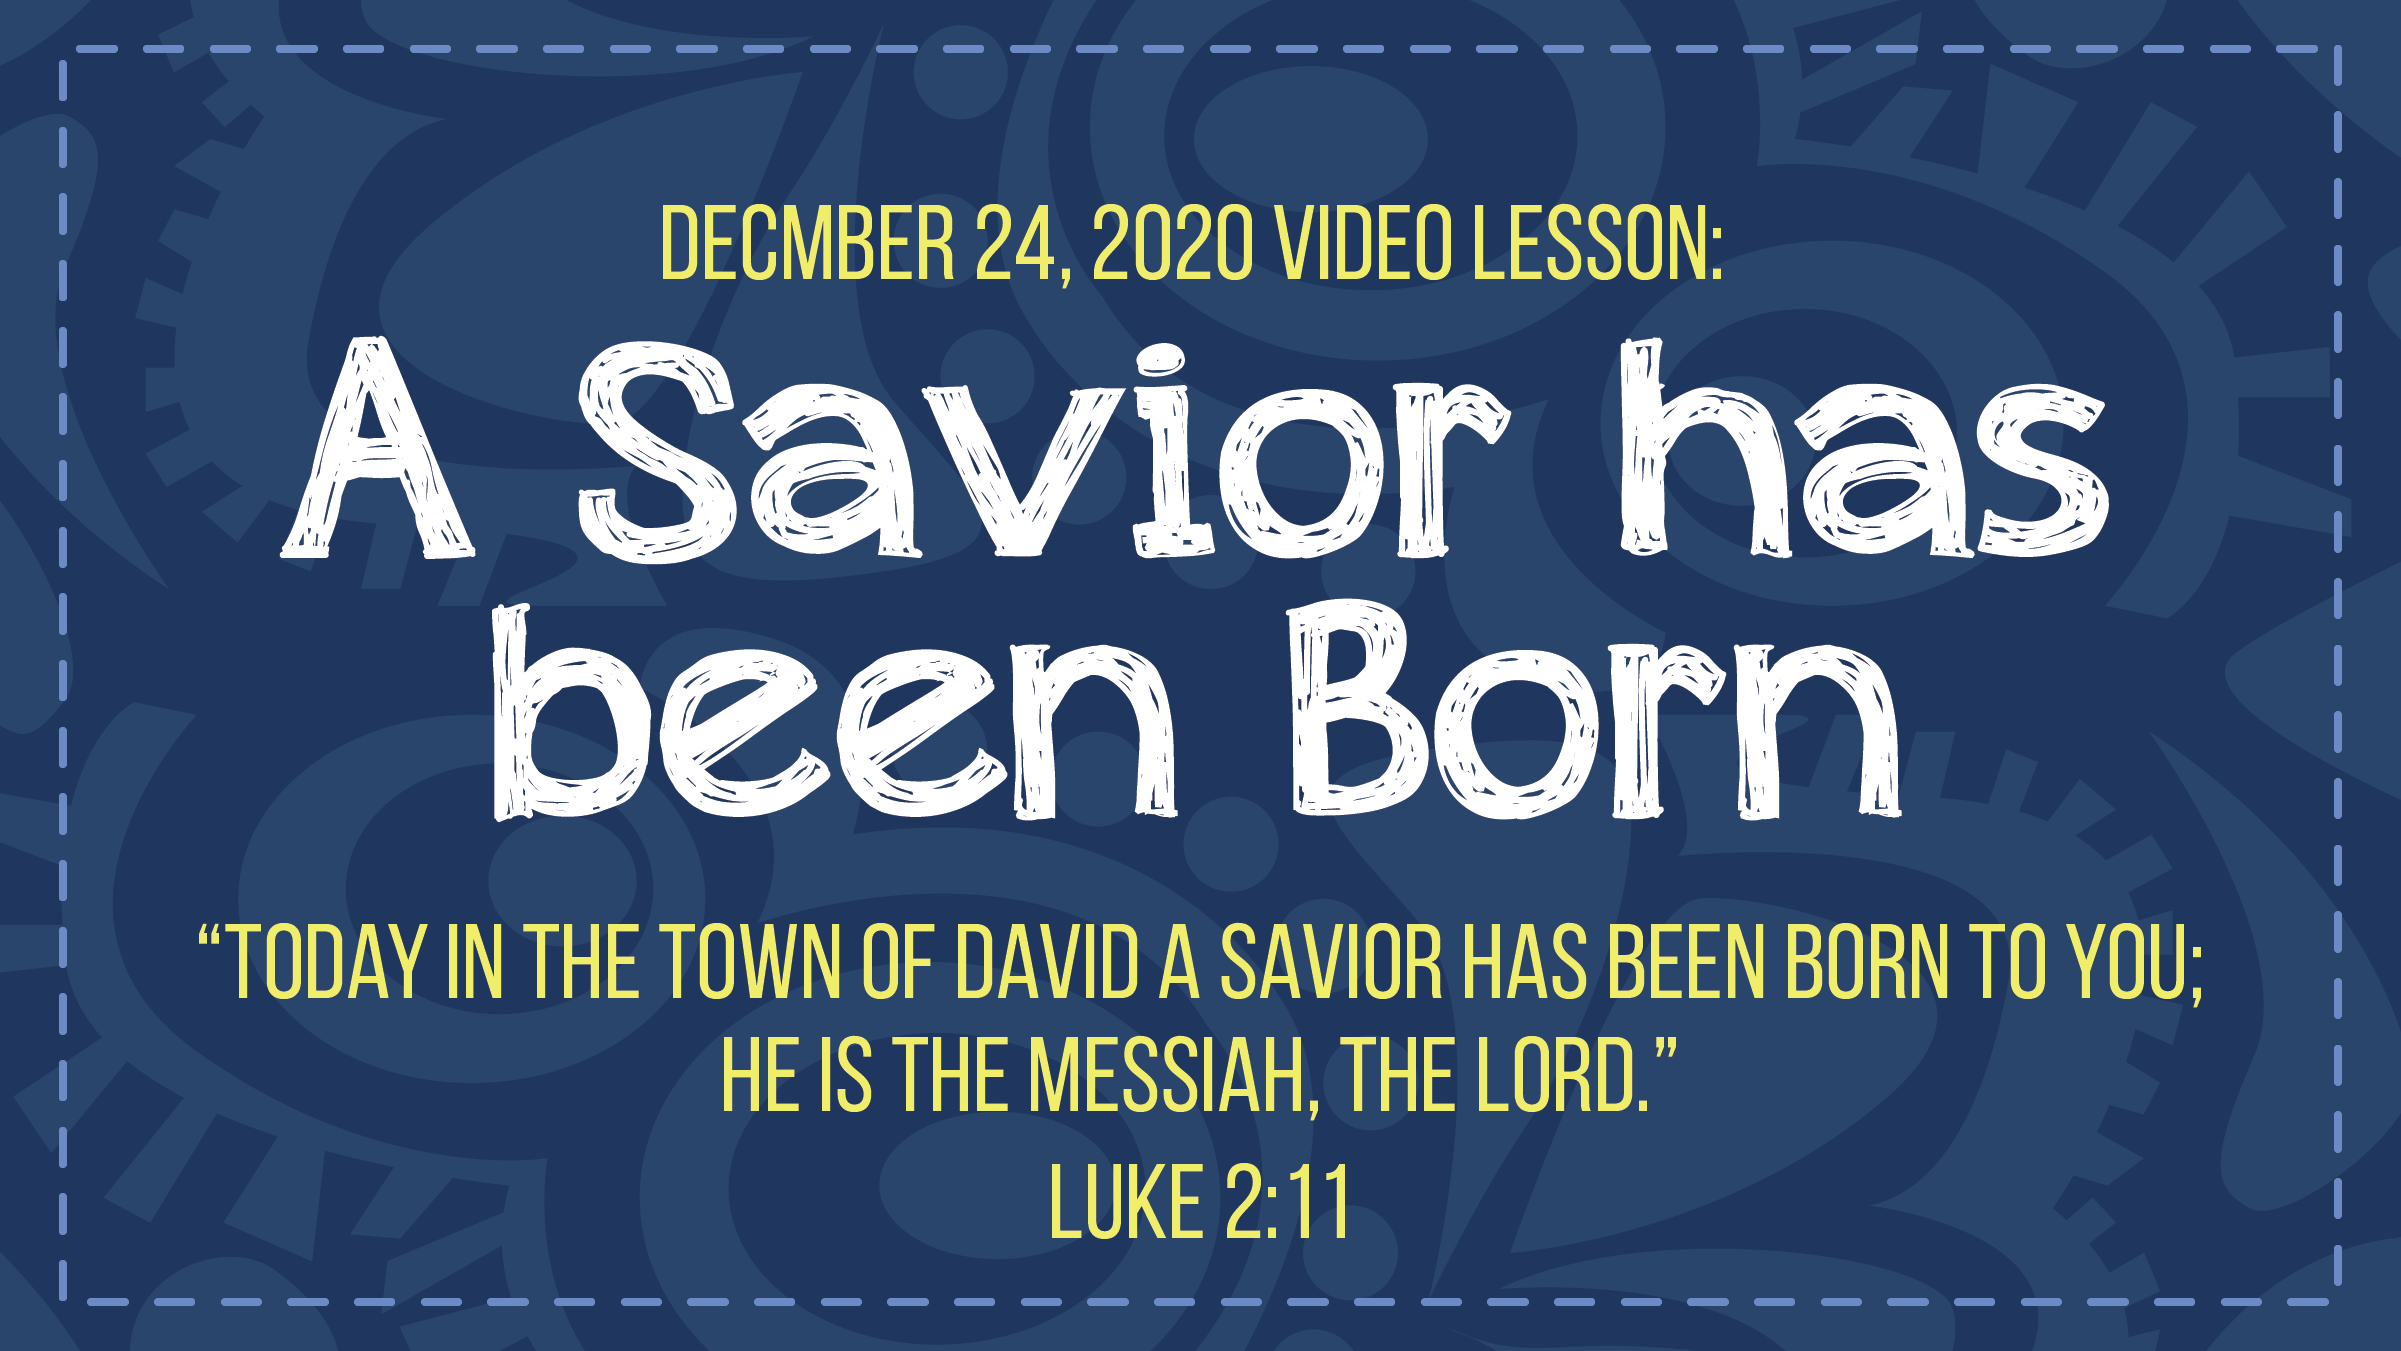 December 24, 2020 Video Lesson